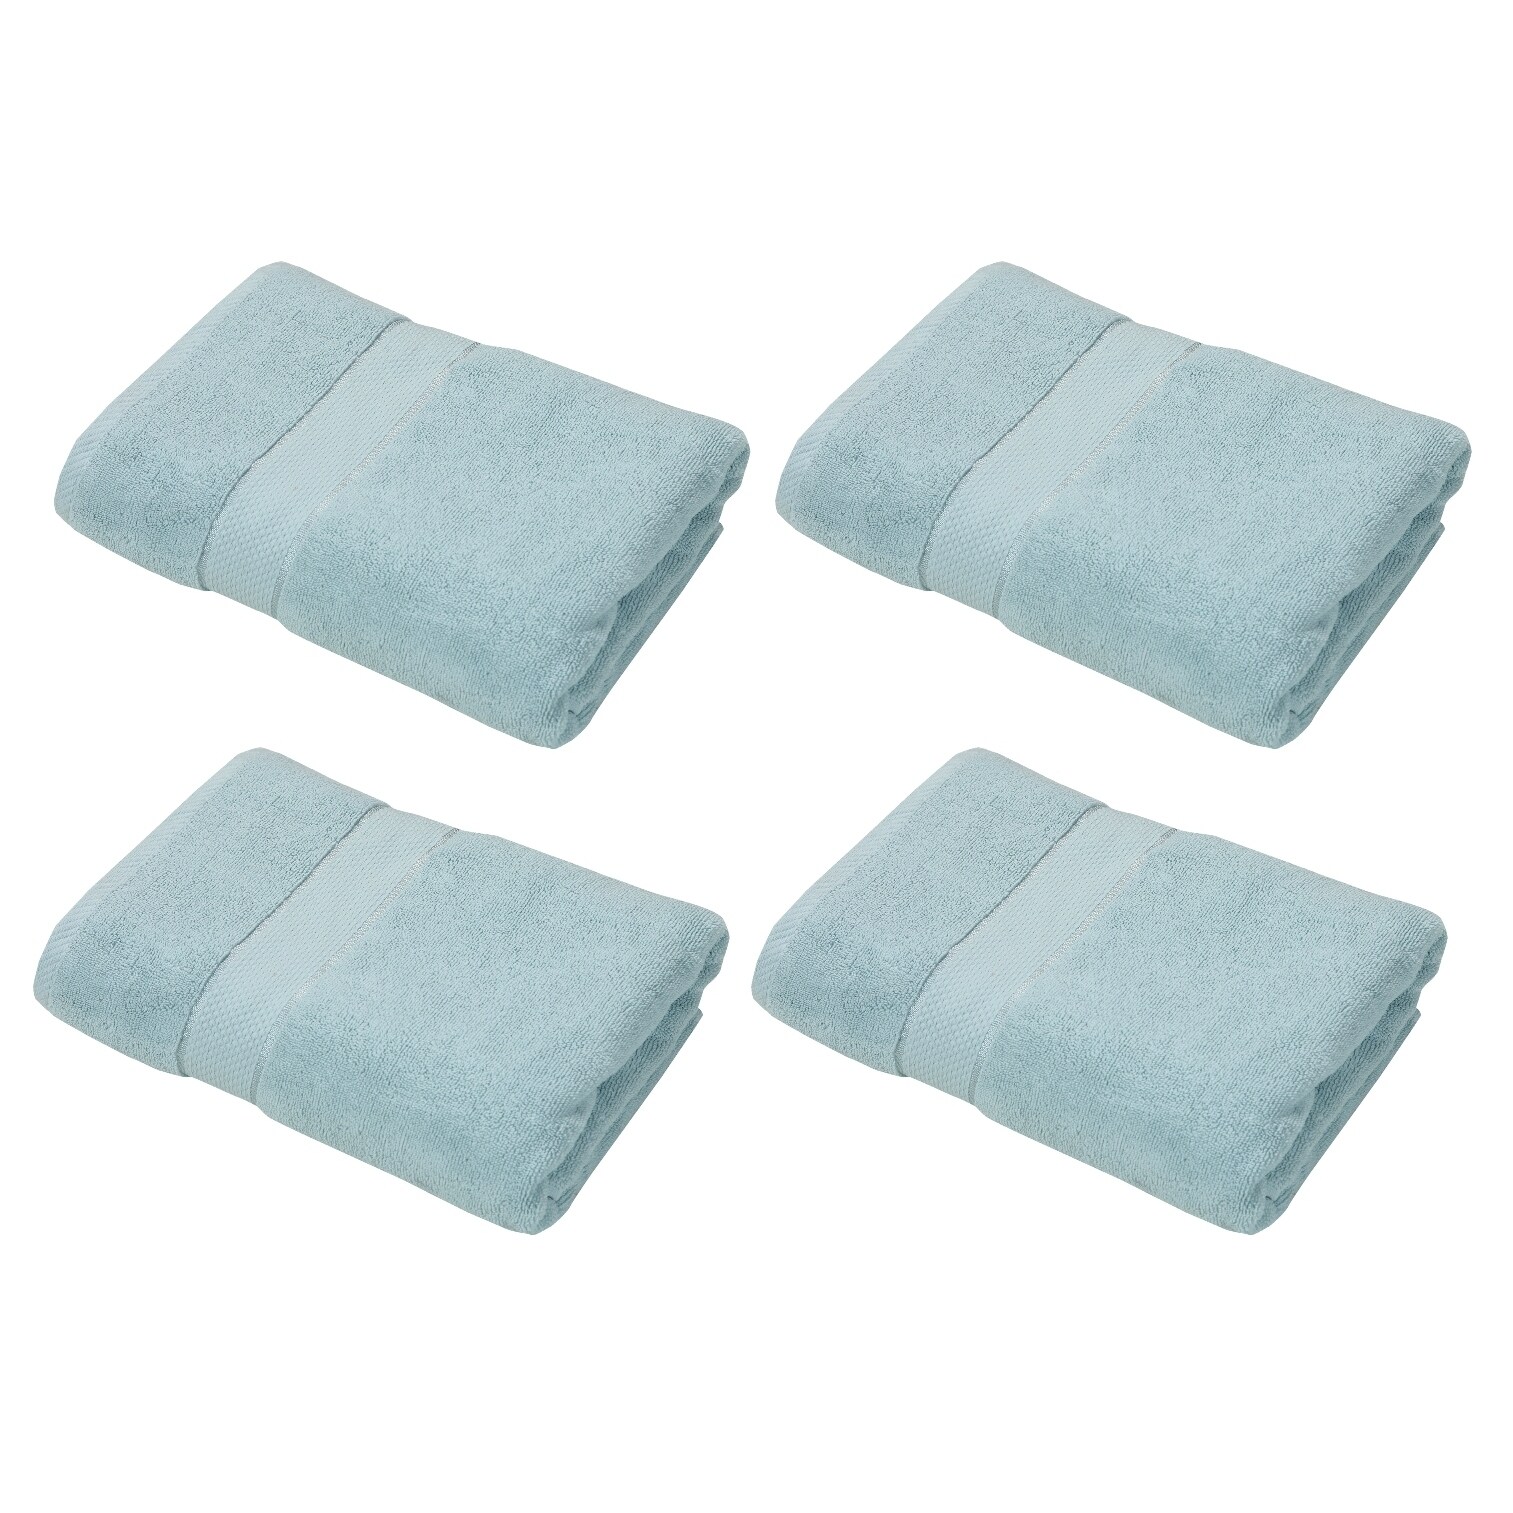 https://ak1.ostkcdn.com/images/products/16394351/100-percent-Cotton-27-inch-x-54-inch-Luxurious-Bath-Towels-Set-of-4-e60ede10-a492-4610-91b3-9b84e0ee38c0.jpg